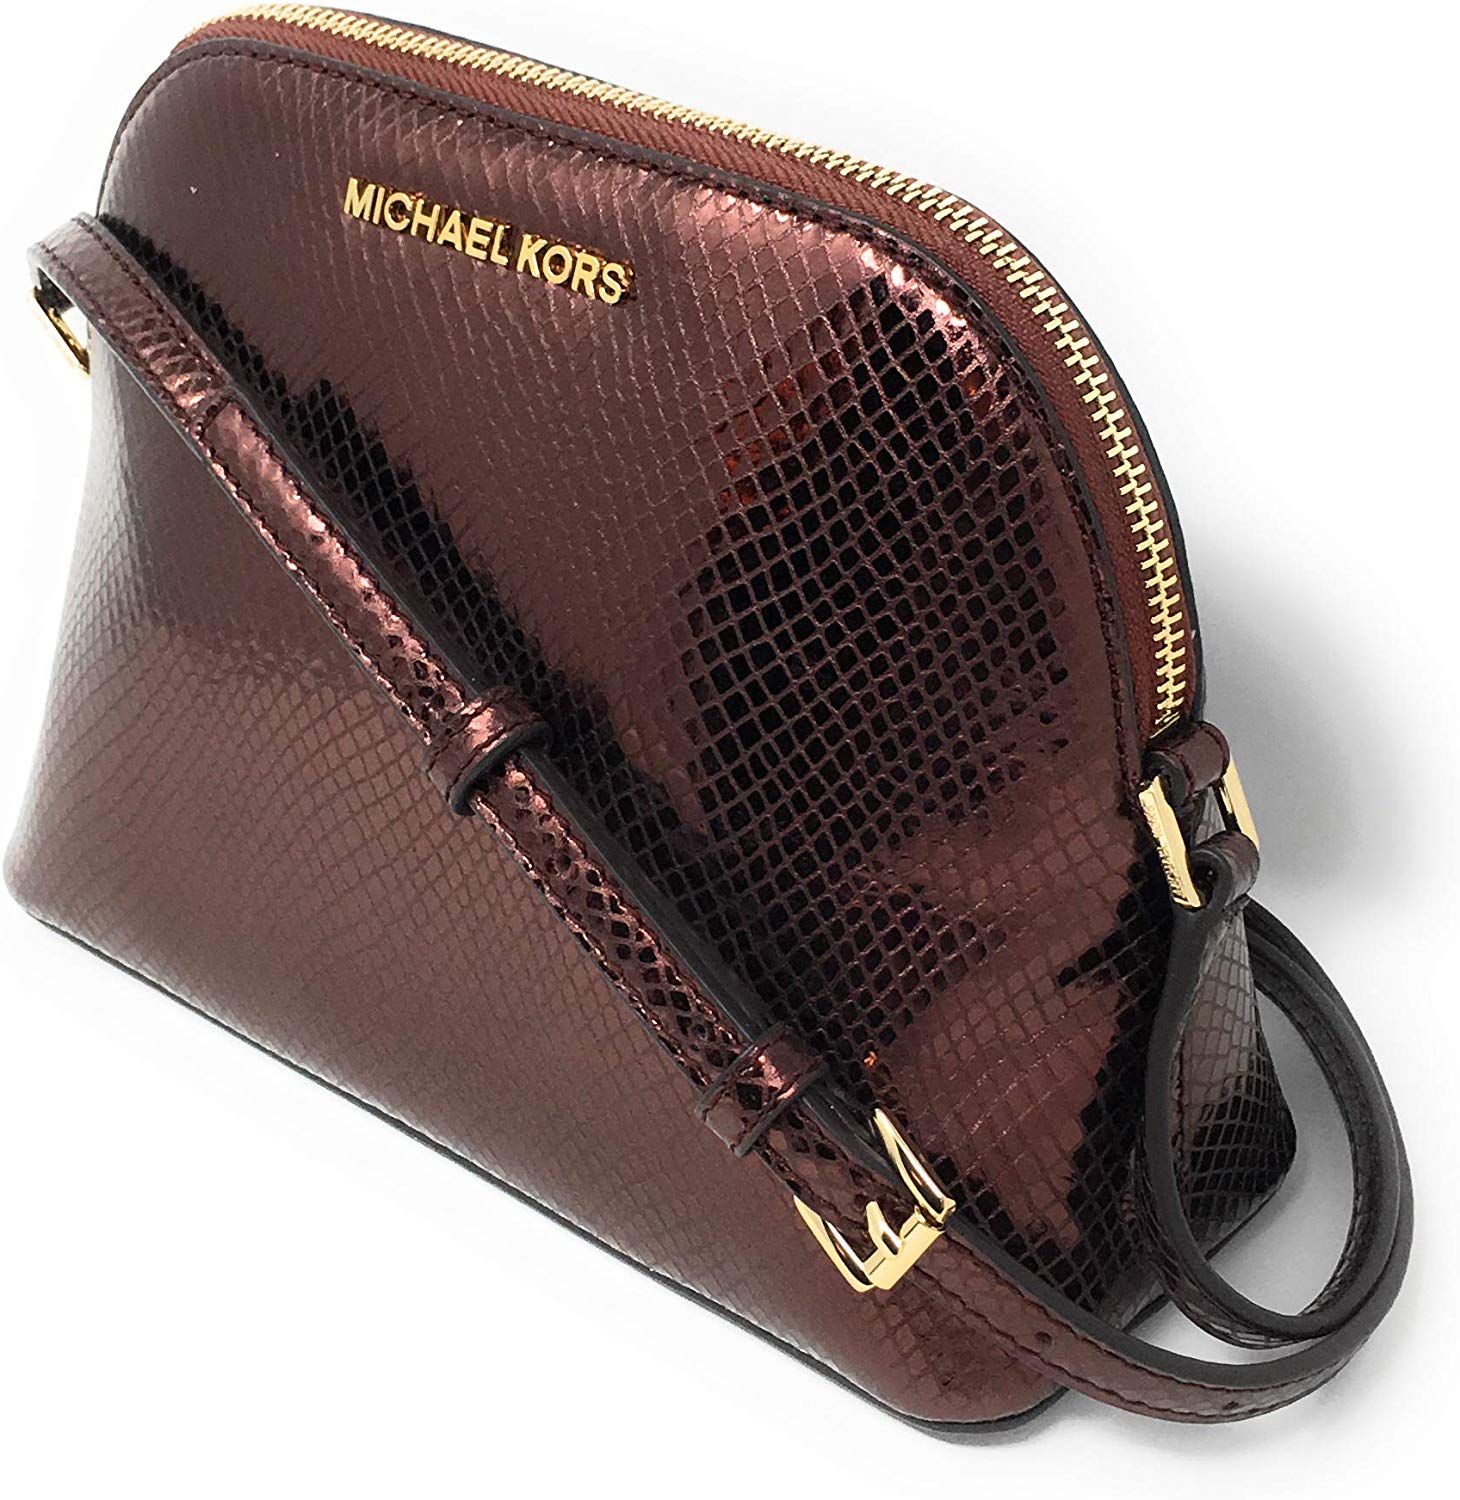 michael kors pebbled leather purse